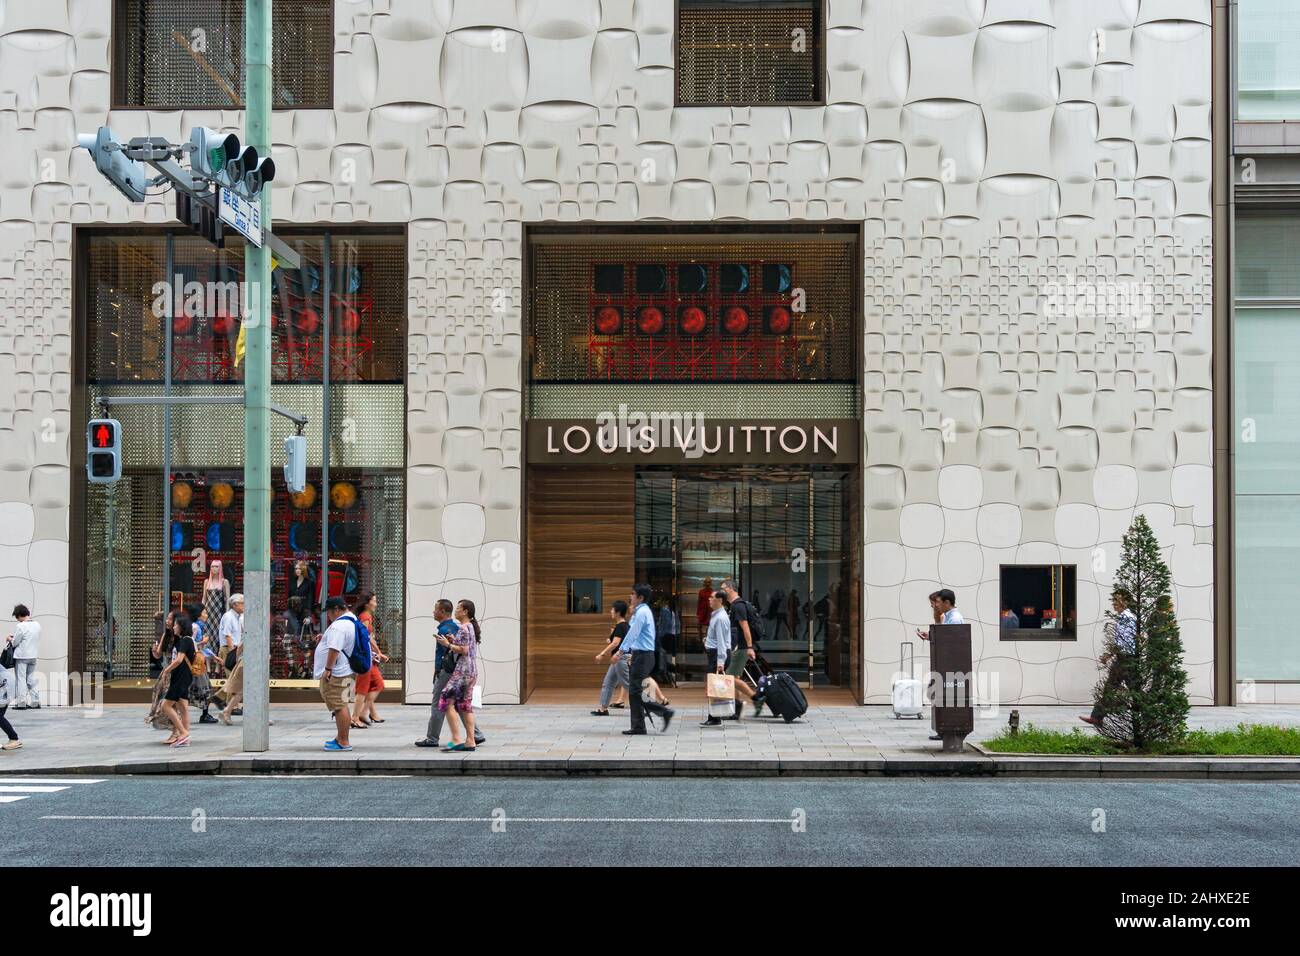 Louis Vuitton store in Tokyo, Japan Stock Photo - Alamy